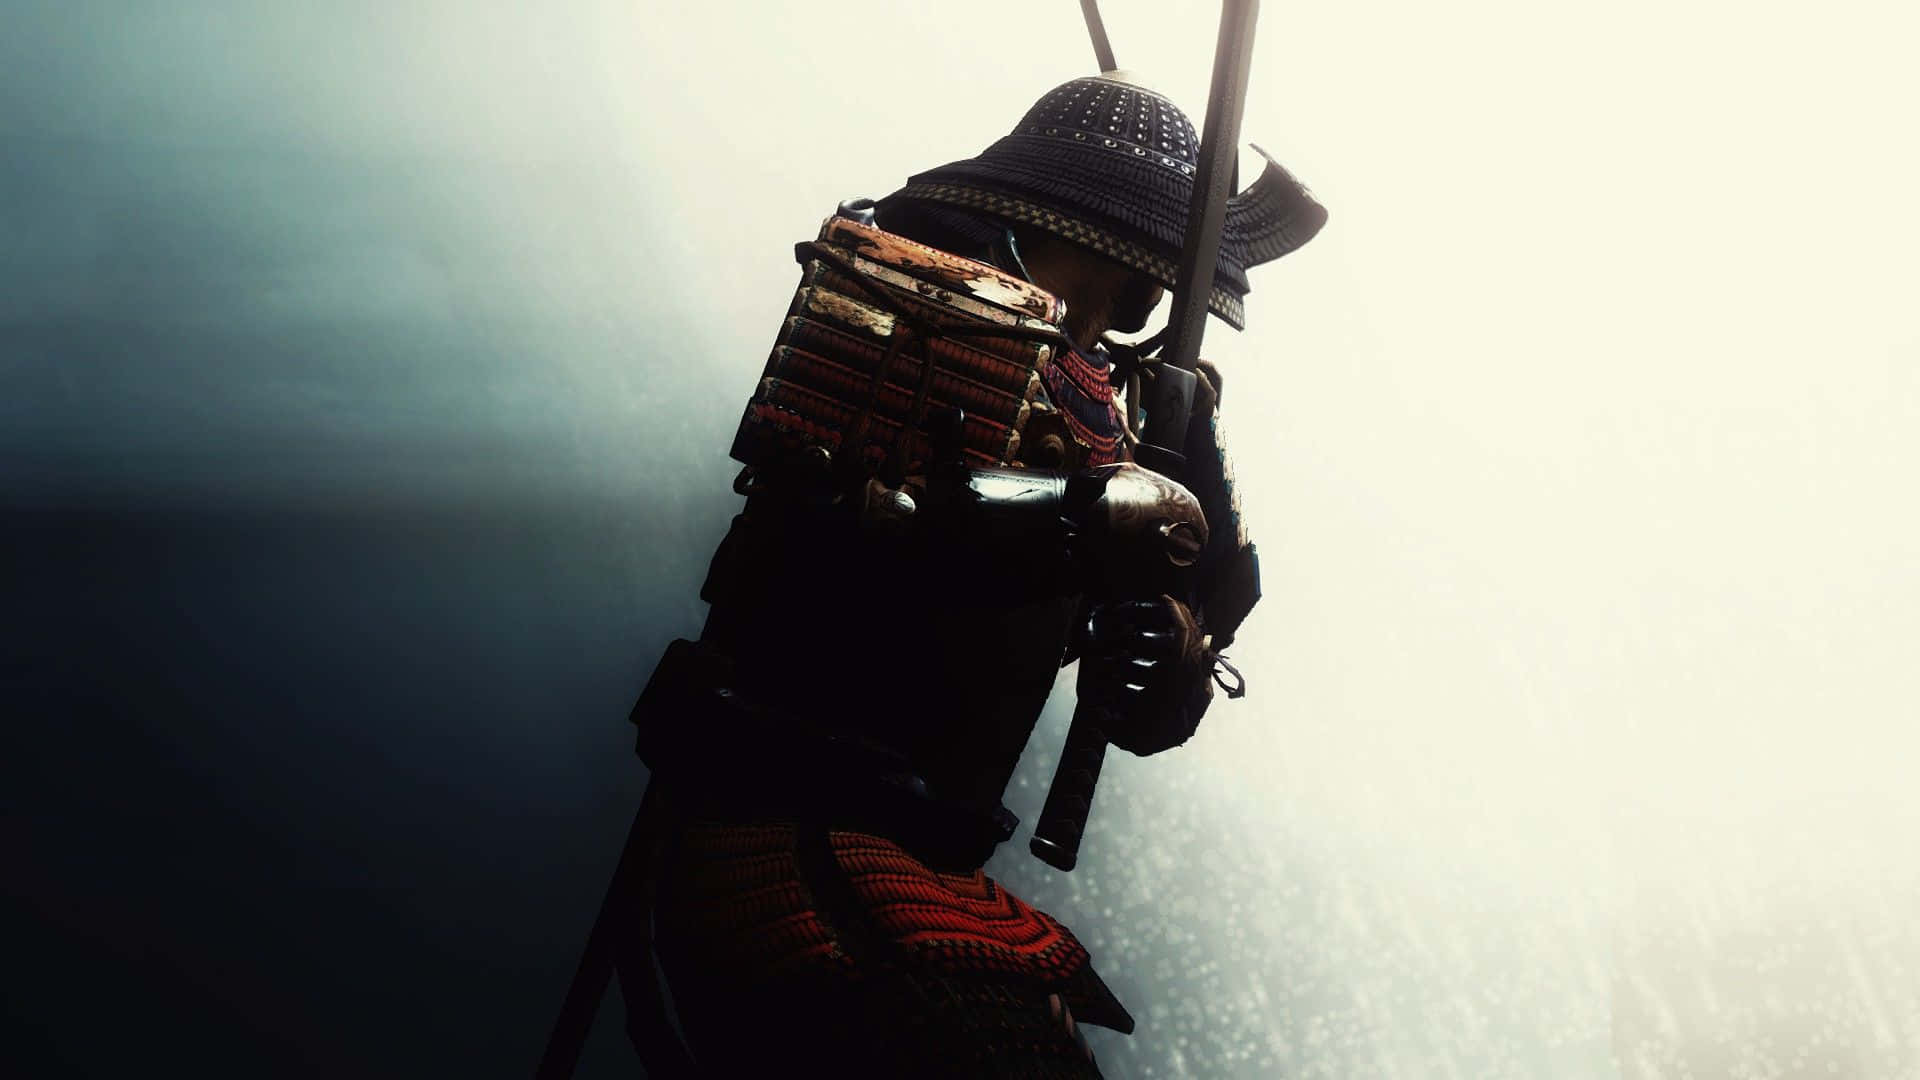 Ancient Samurai Armor on display Wallpaper